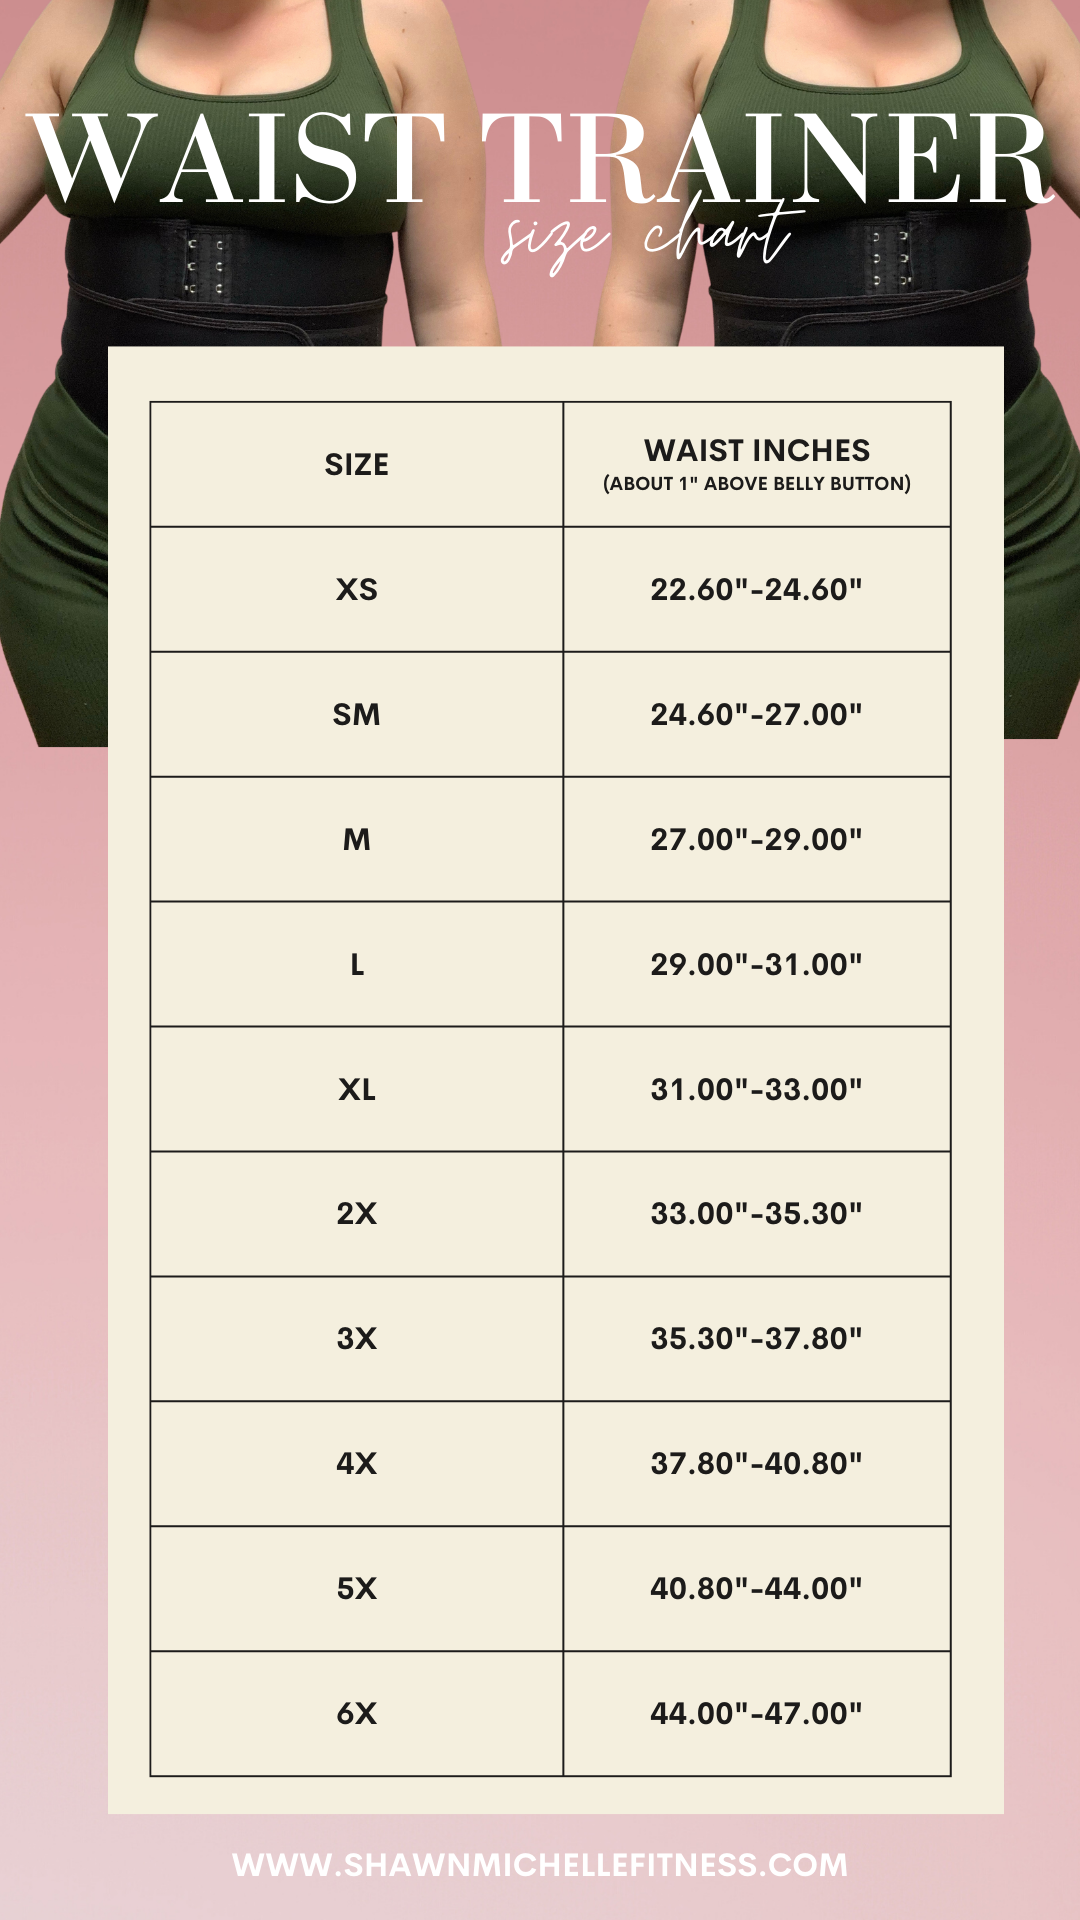 Waist Training Size Guide